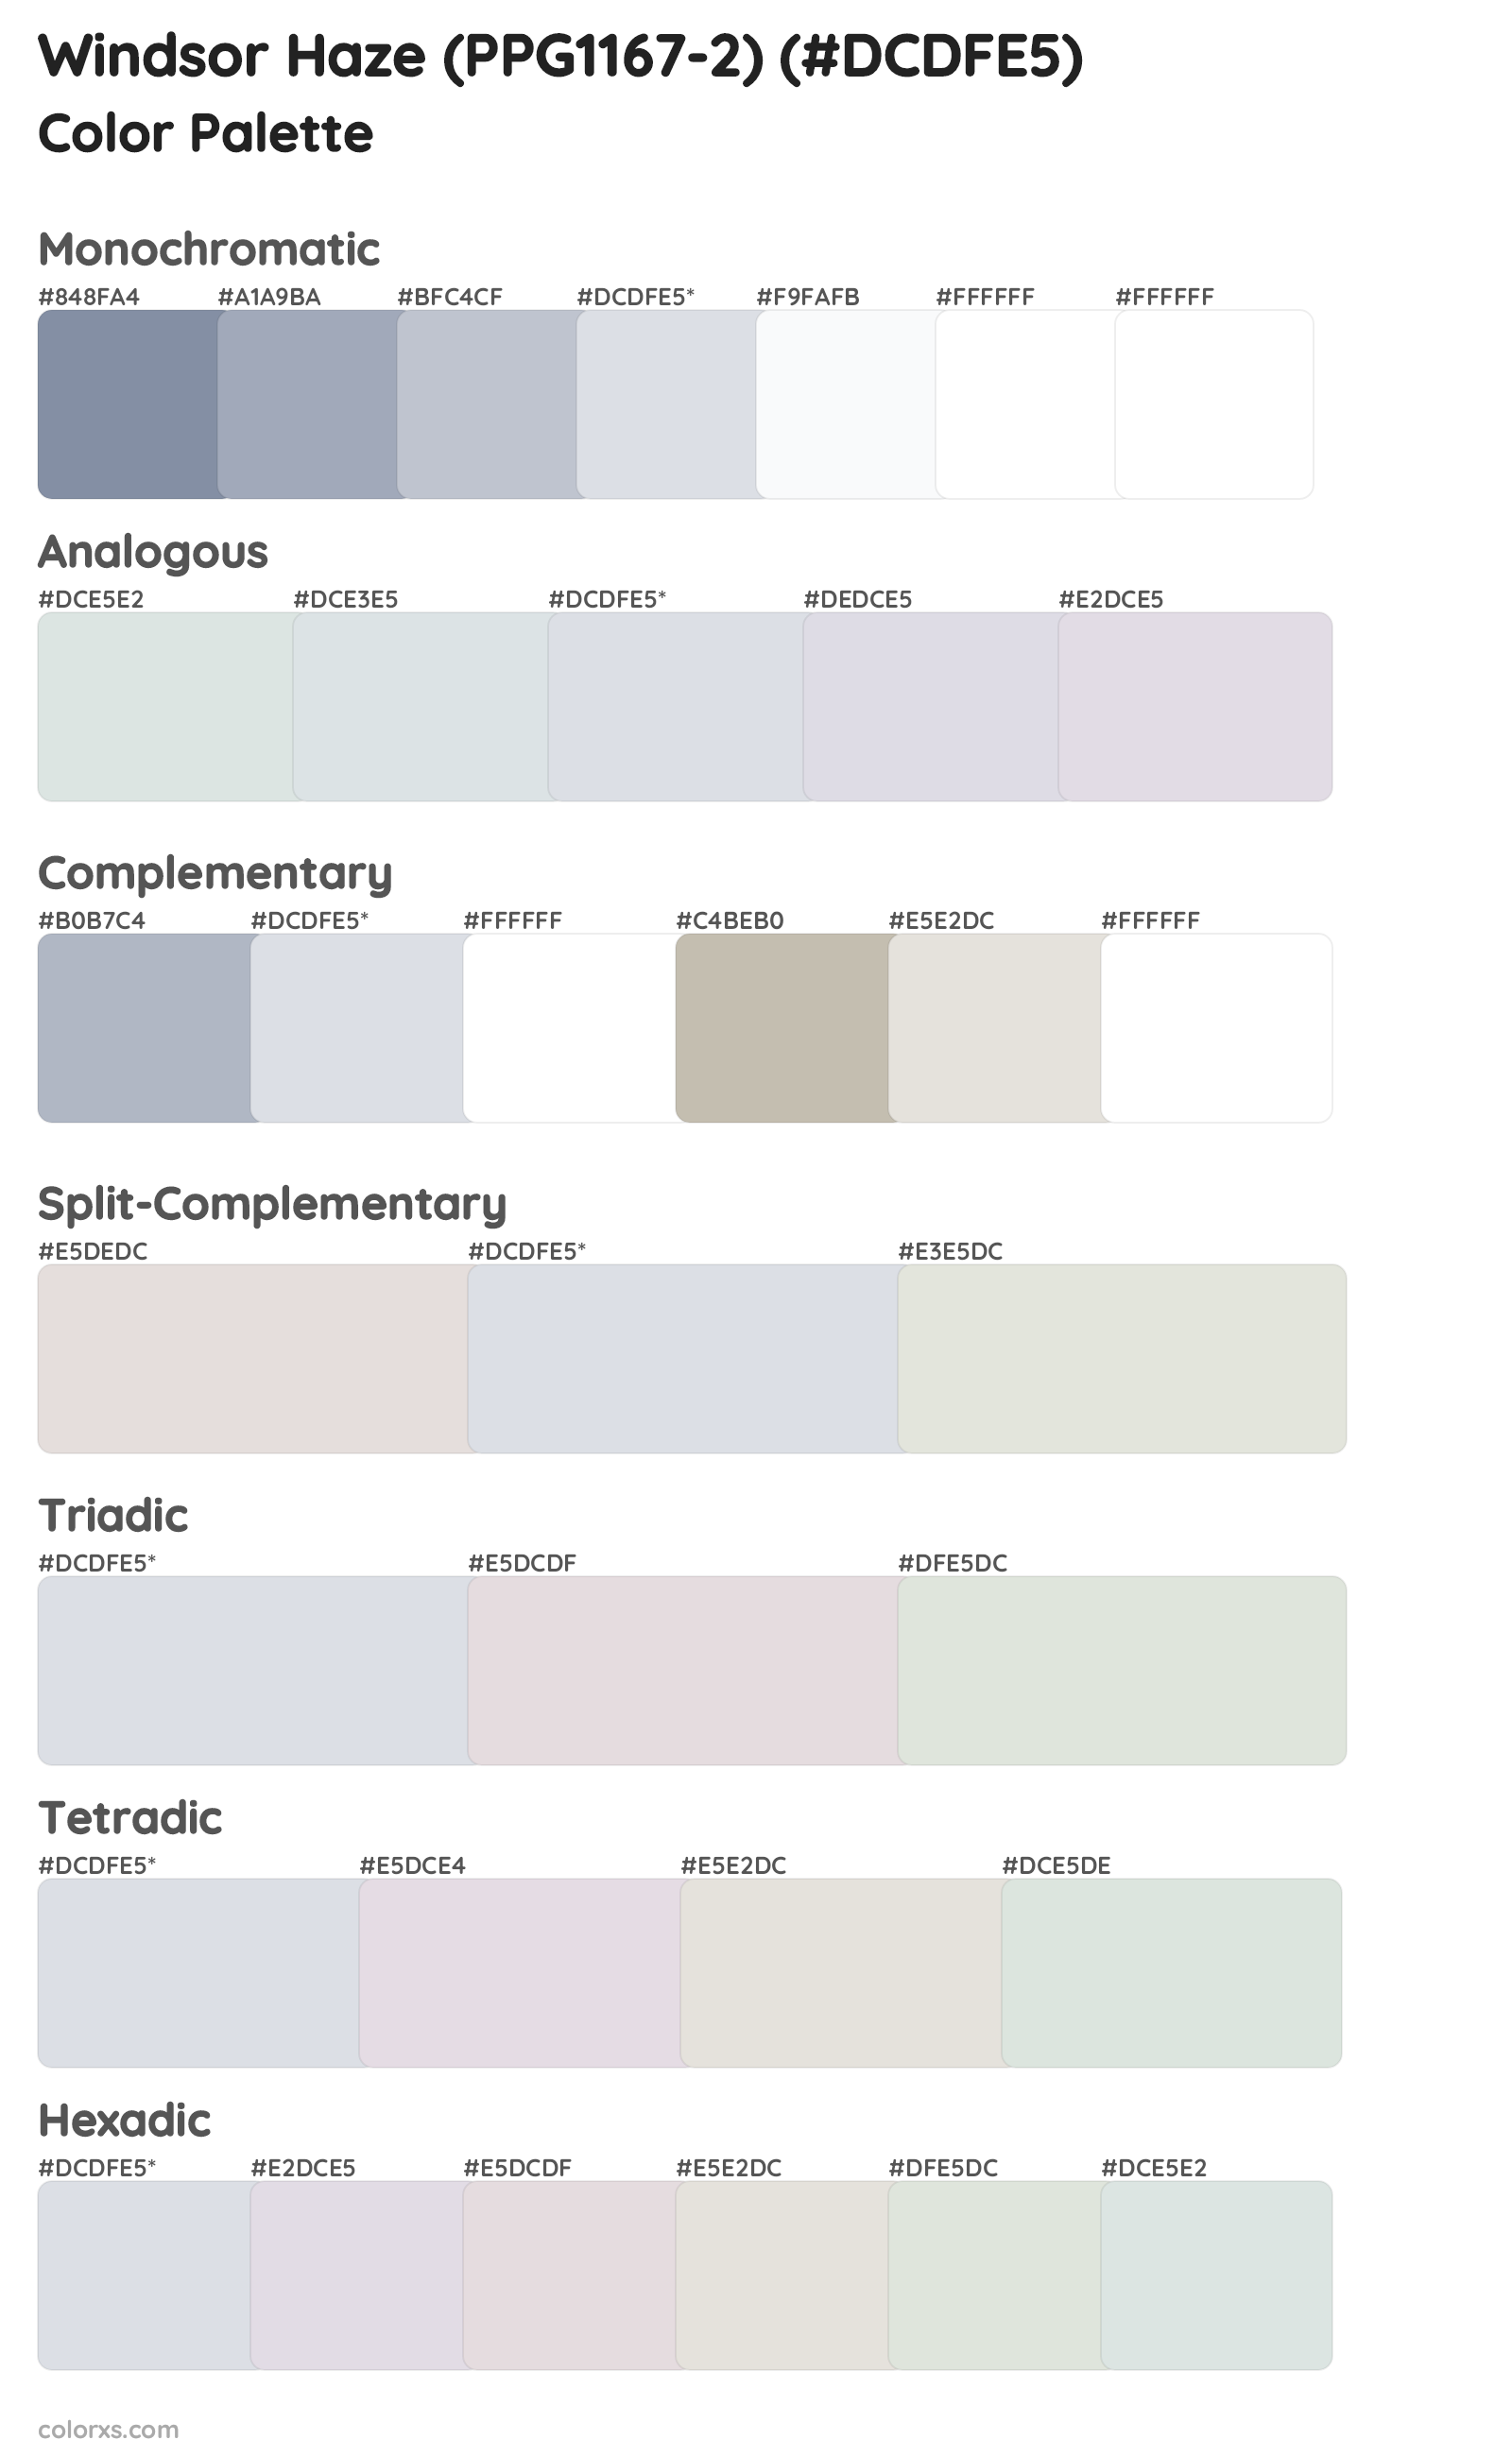 Windsor Haze (PPG1167-2) Color Scheme Palettes